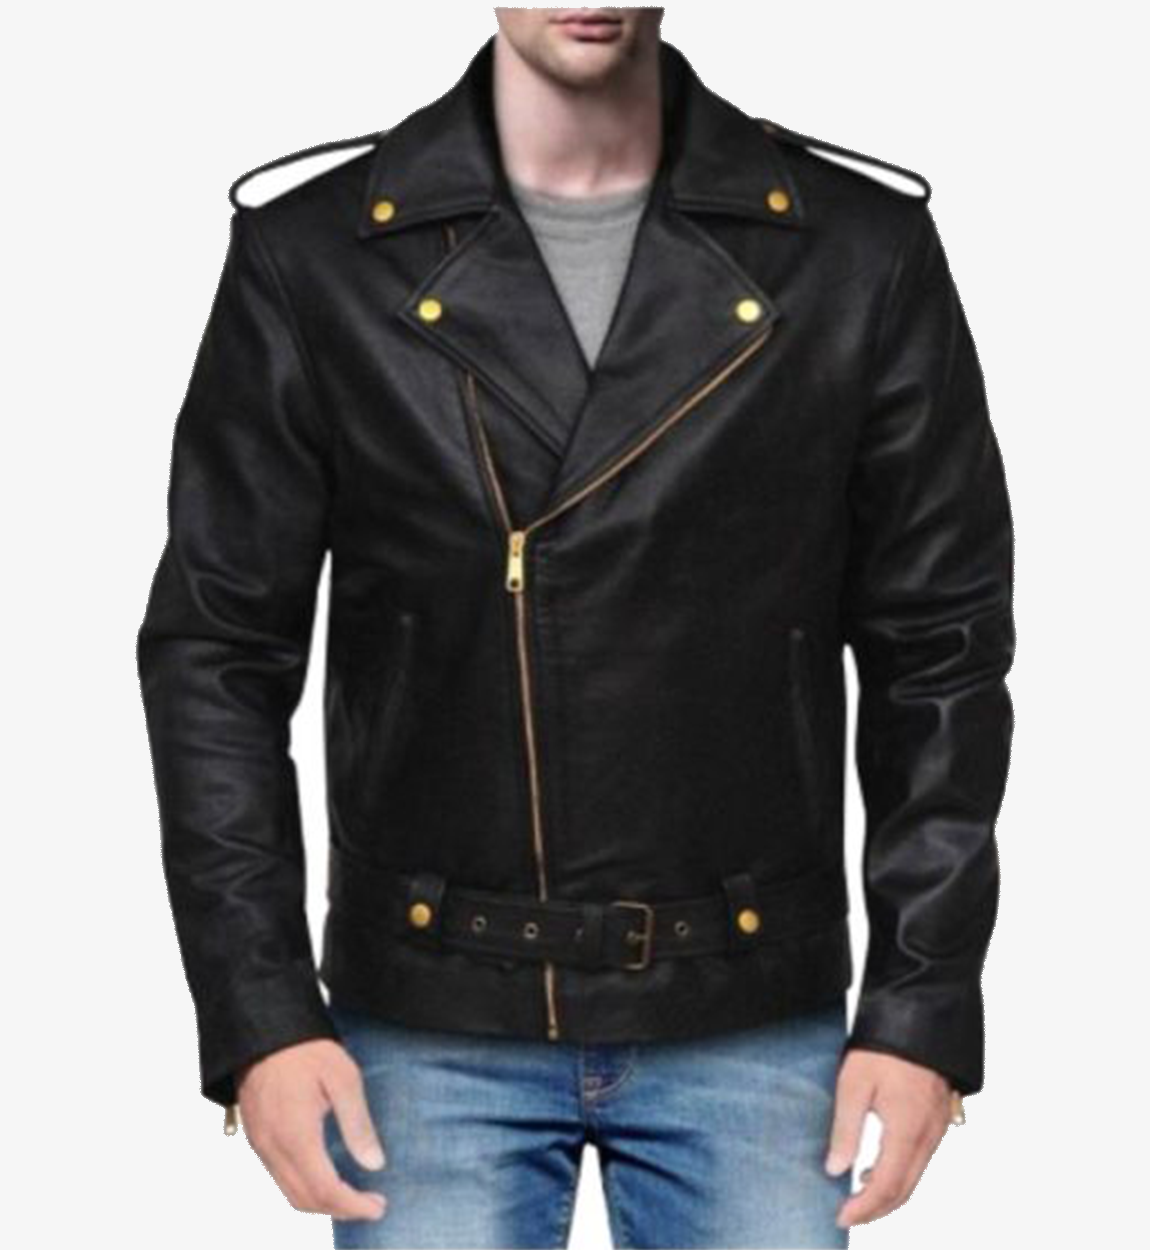 Classic Black Brando Motorcycle Leather Jacket